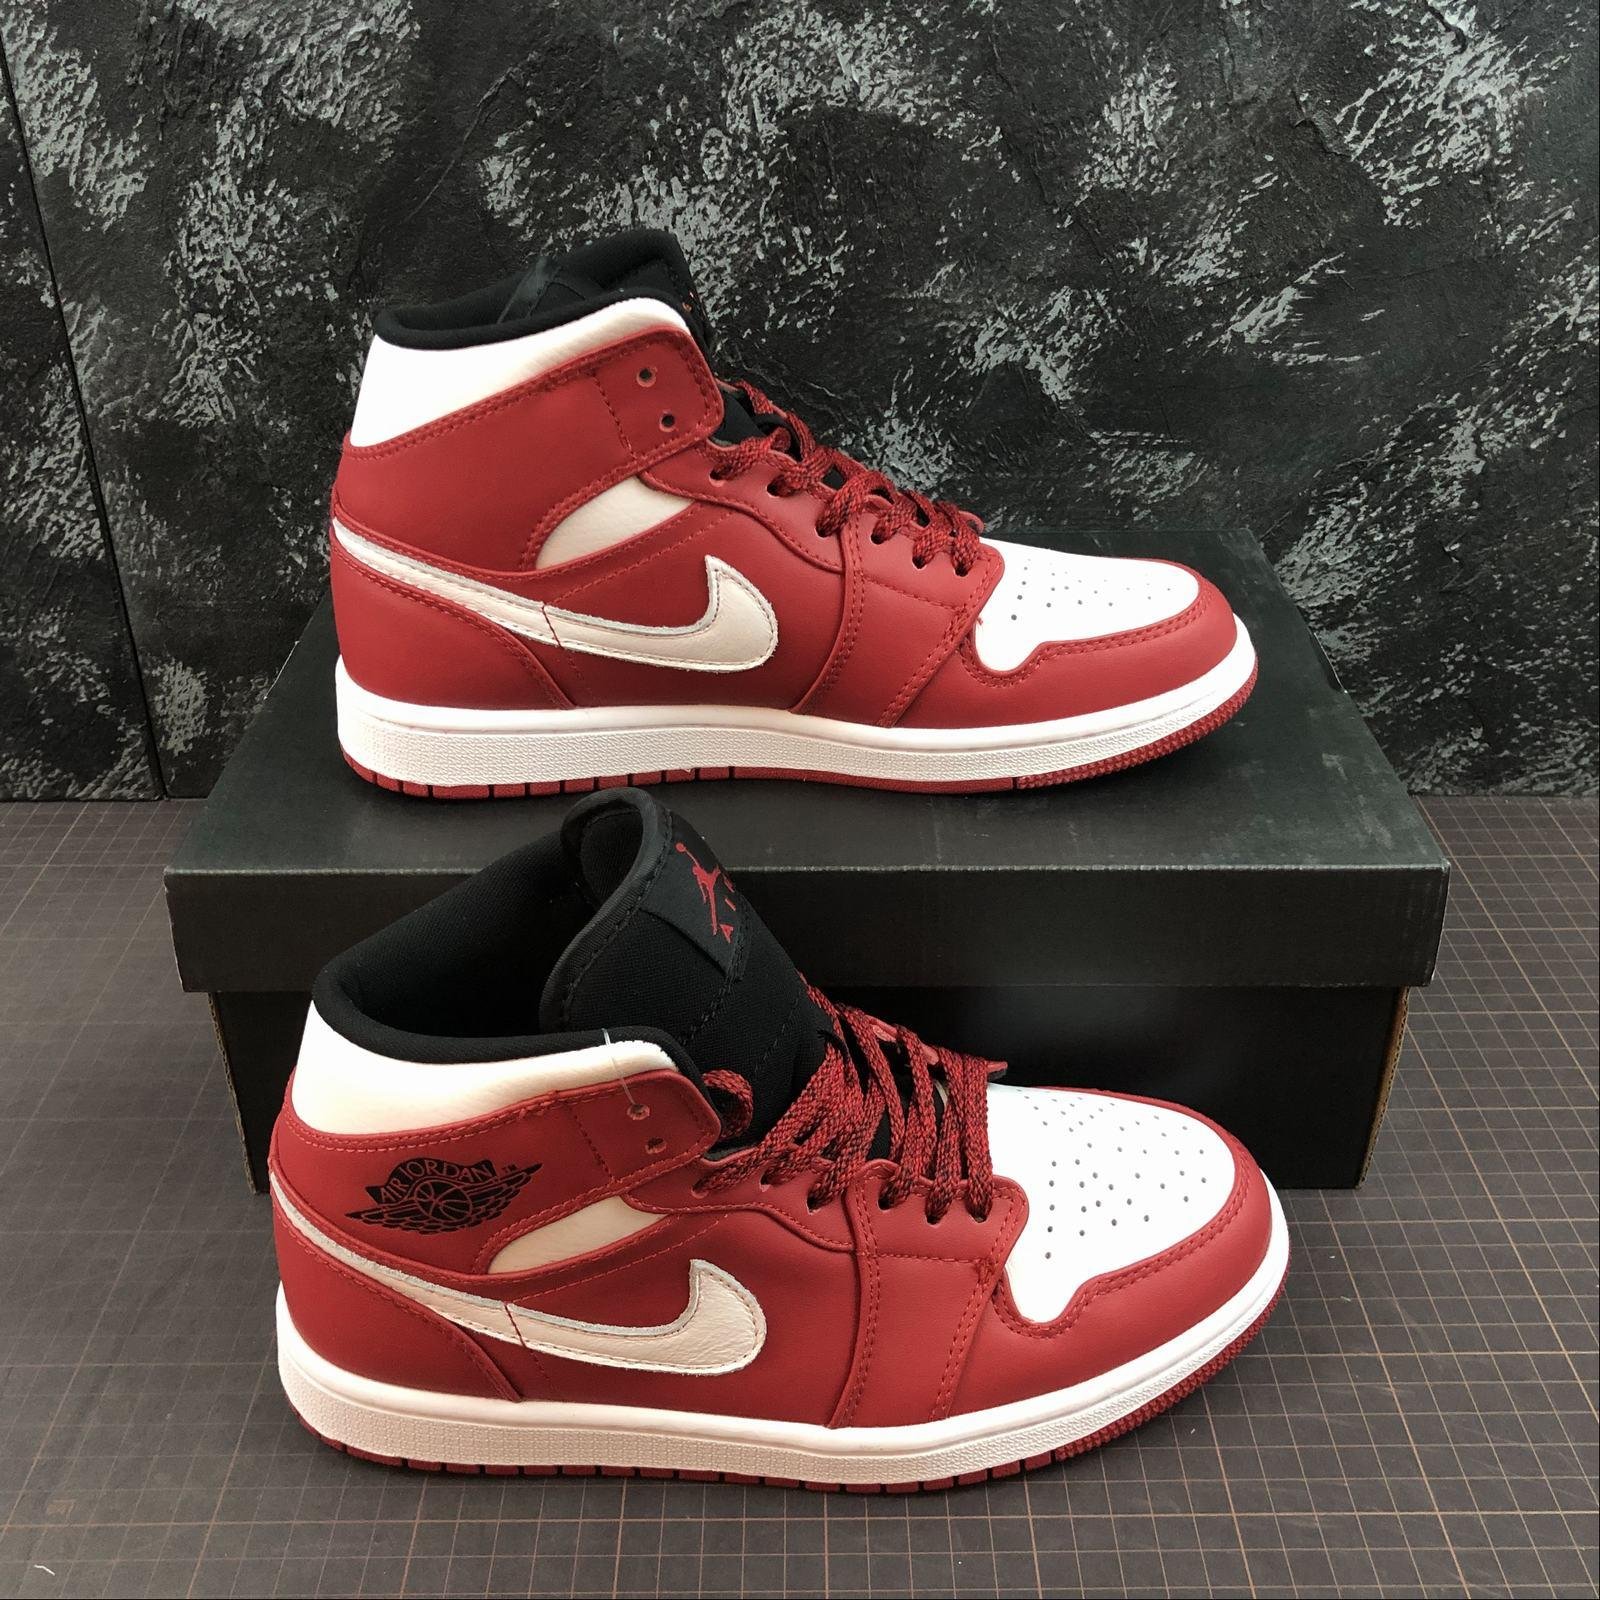 New Air Jordan 1 X Off-White Men's Basketball Shoes  sneaker shoes